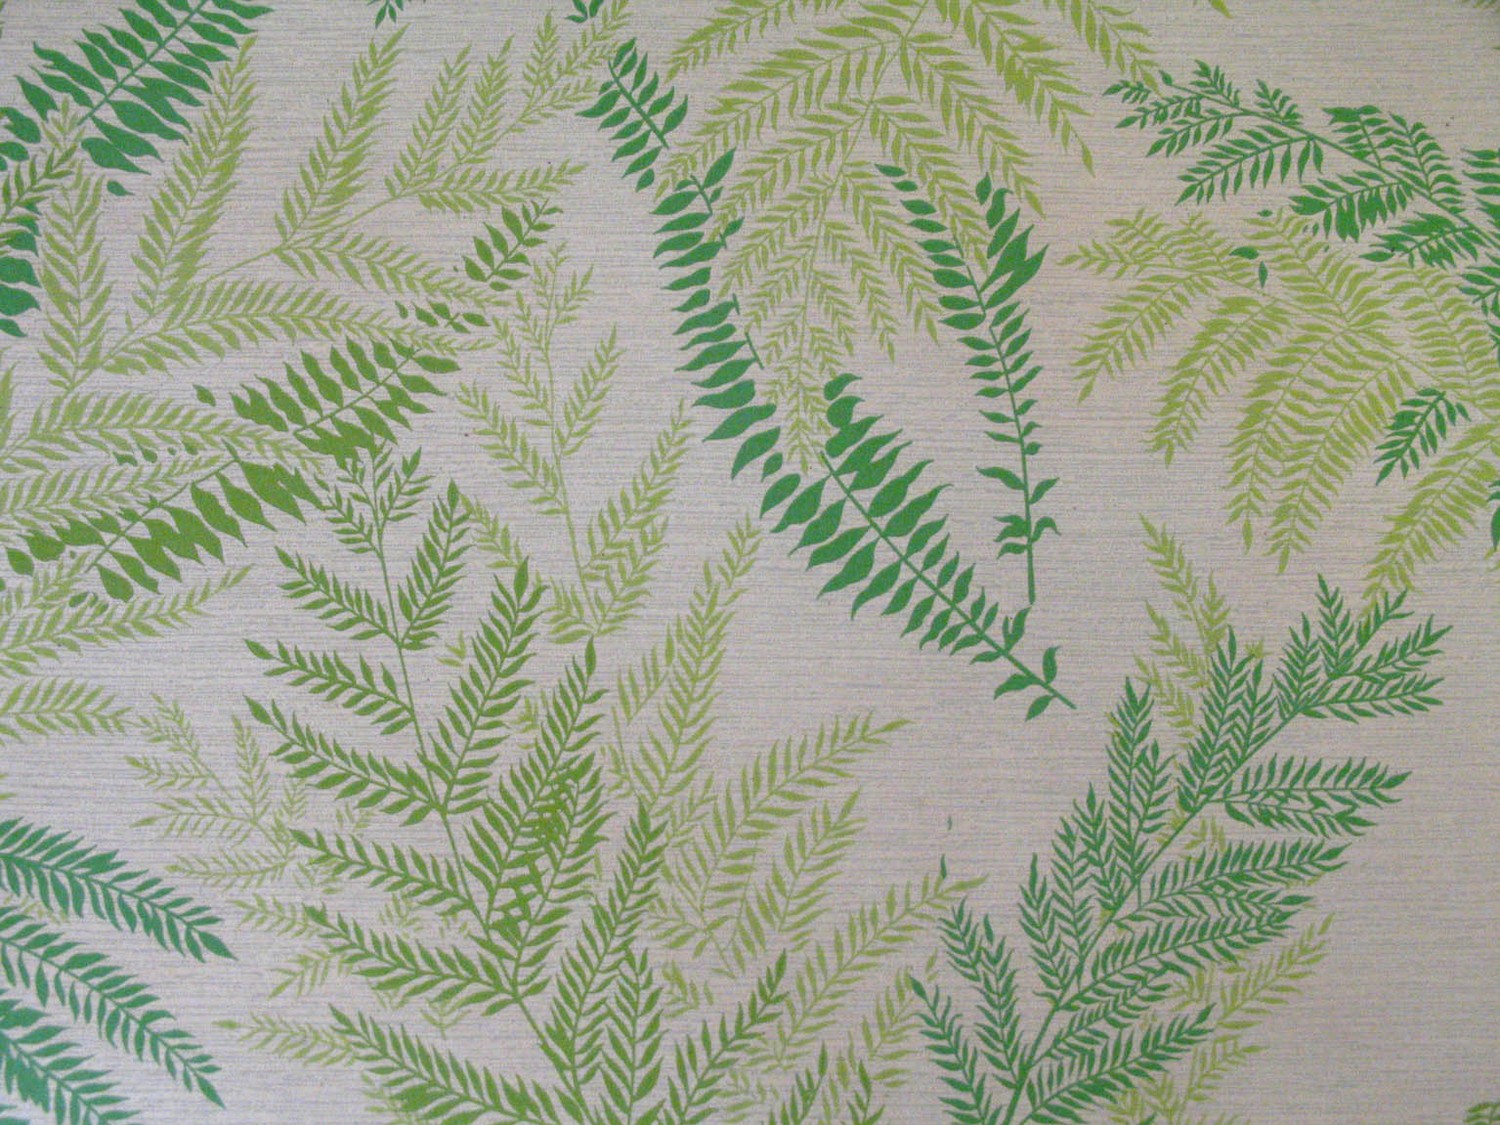 Vintage Fern Leaf Wallpaper Green Silhouette By Vintage73 - Desktop Wallpaper Fern Leaves , HD Wallpaper & Backgrounds